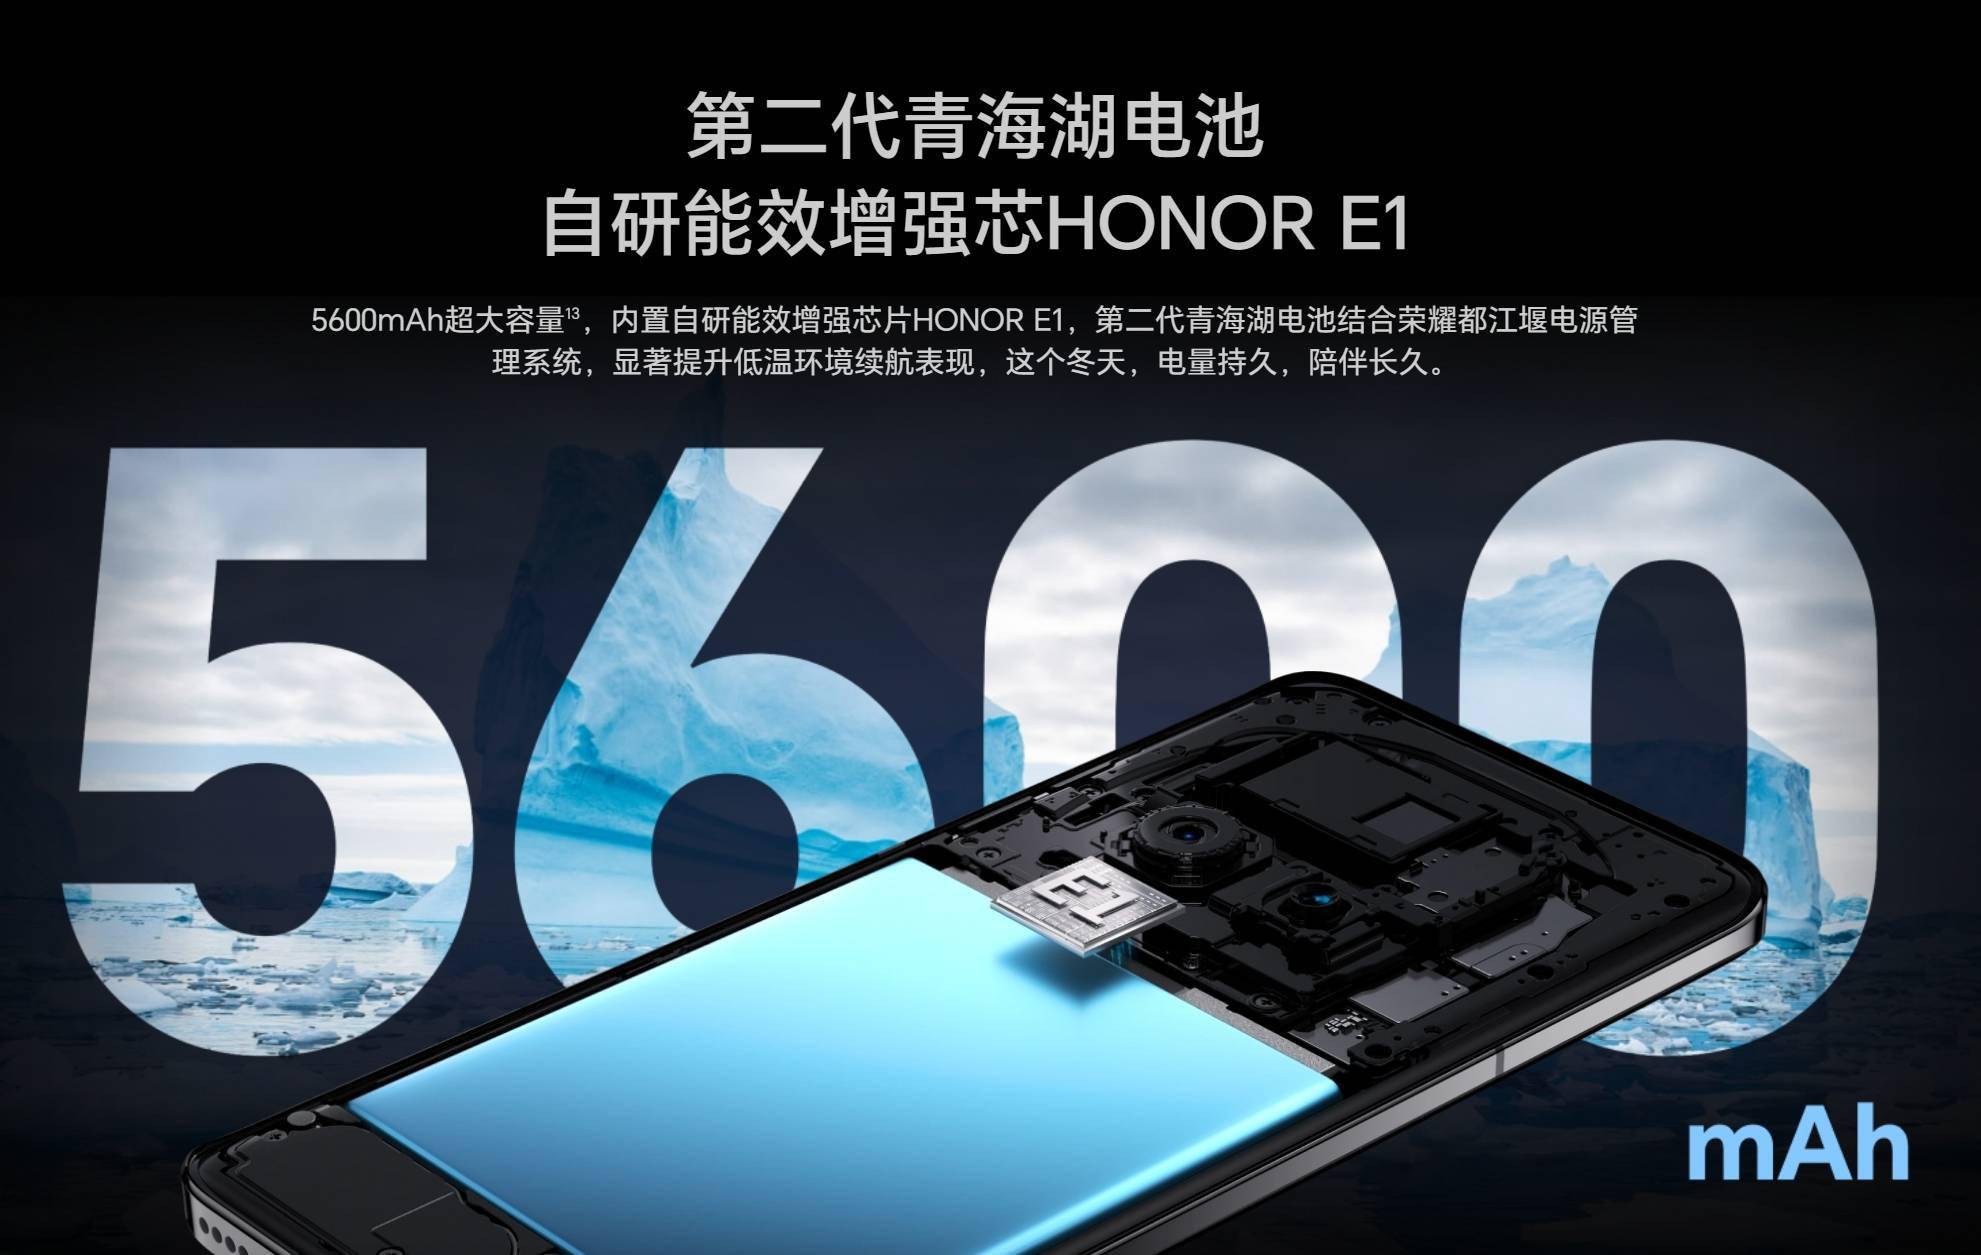 Honor’s First Mini Foldable Phone